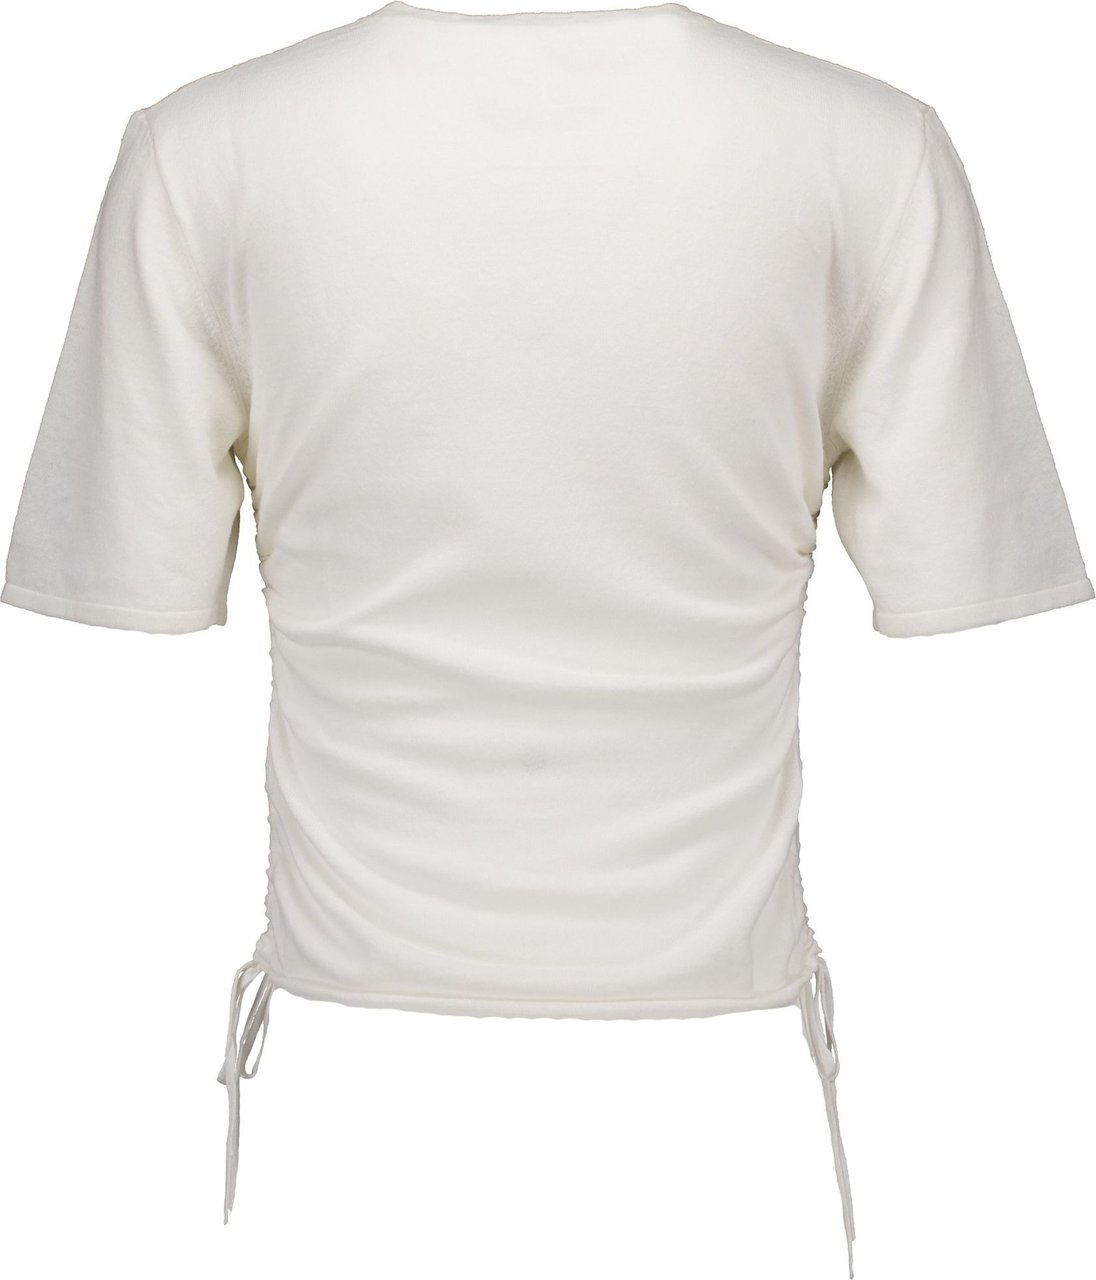 Samsøe Samsøe Saalbane t-shirts off white Wit